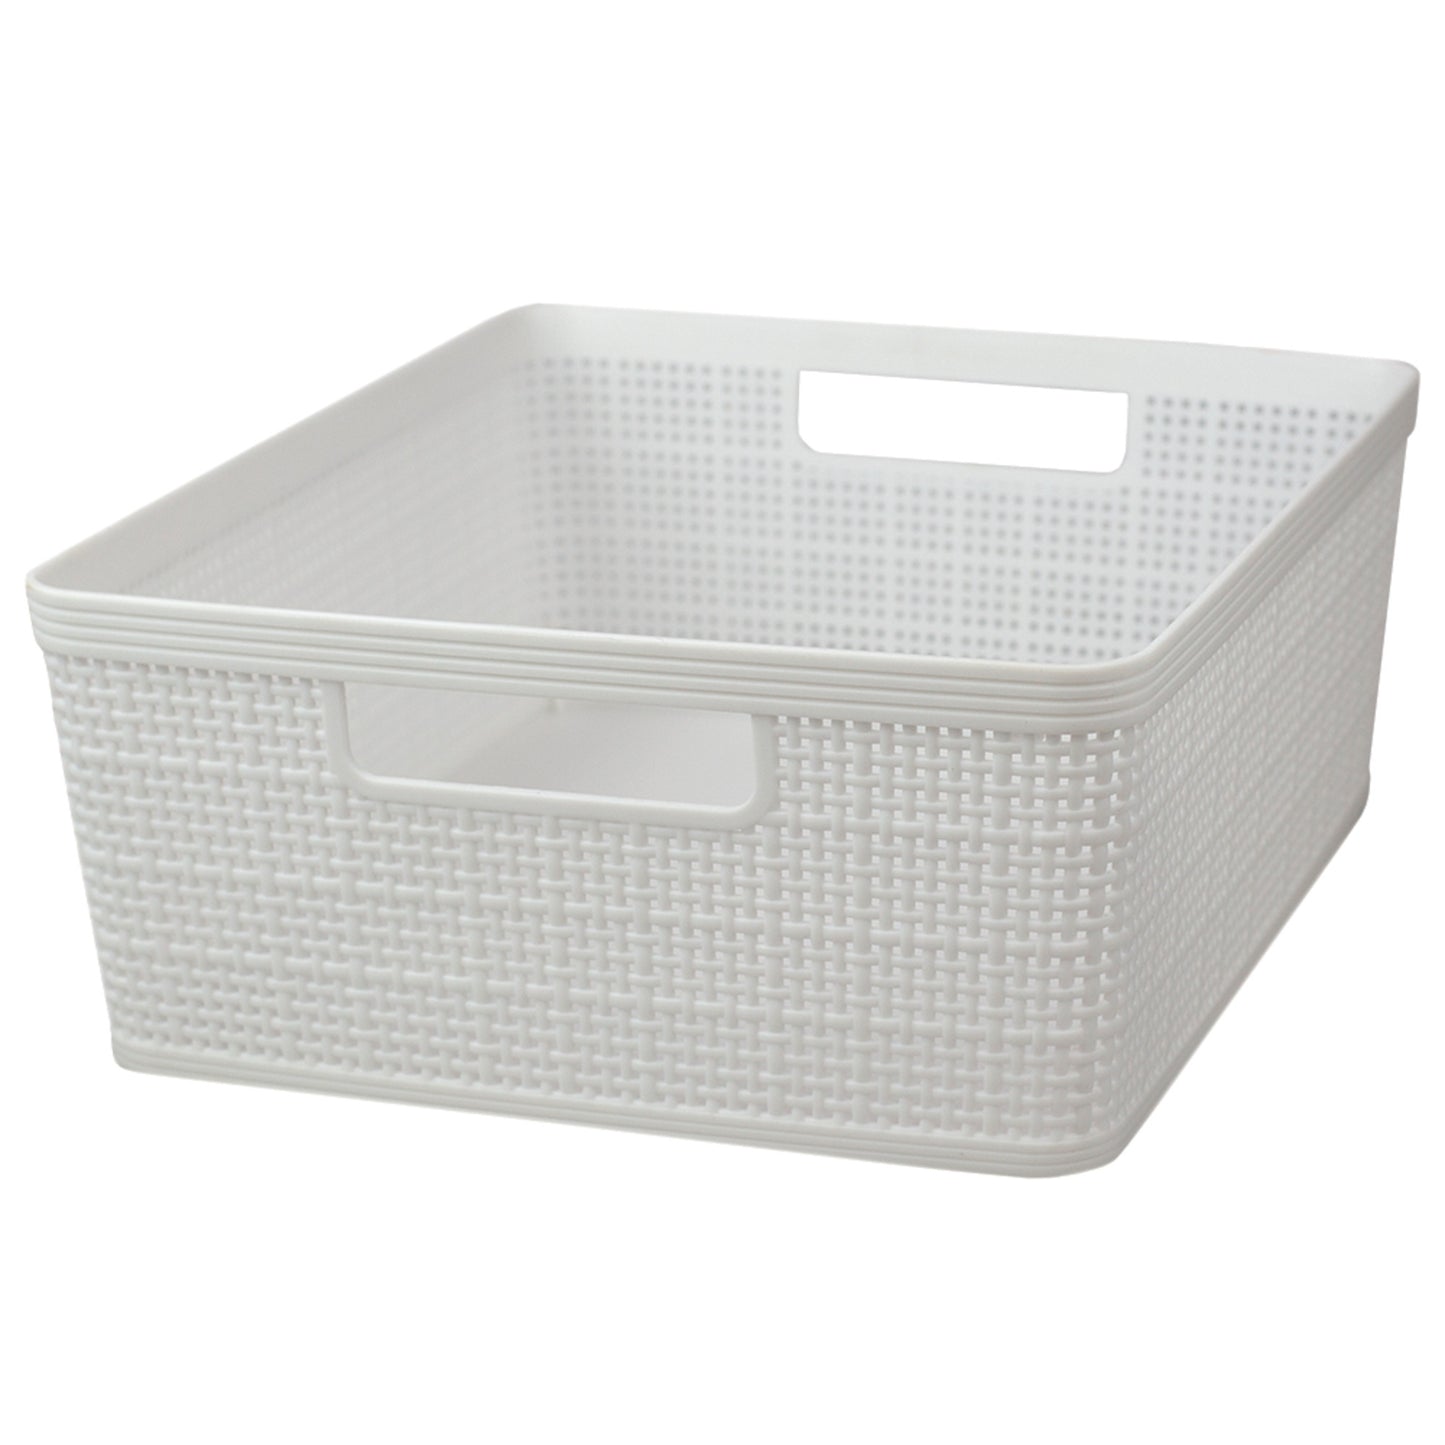 Home Basics Trellis Large Plastic Storage Basket with Cut-Out Handles, White - White